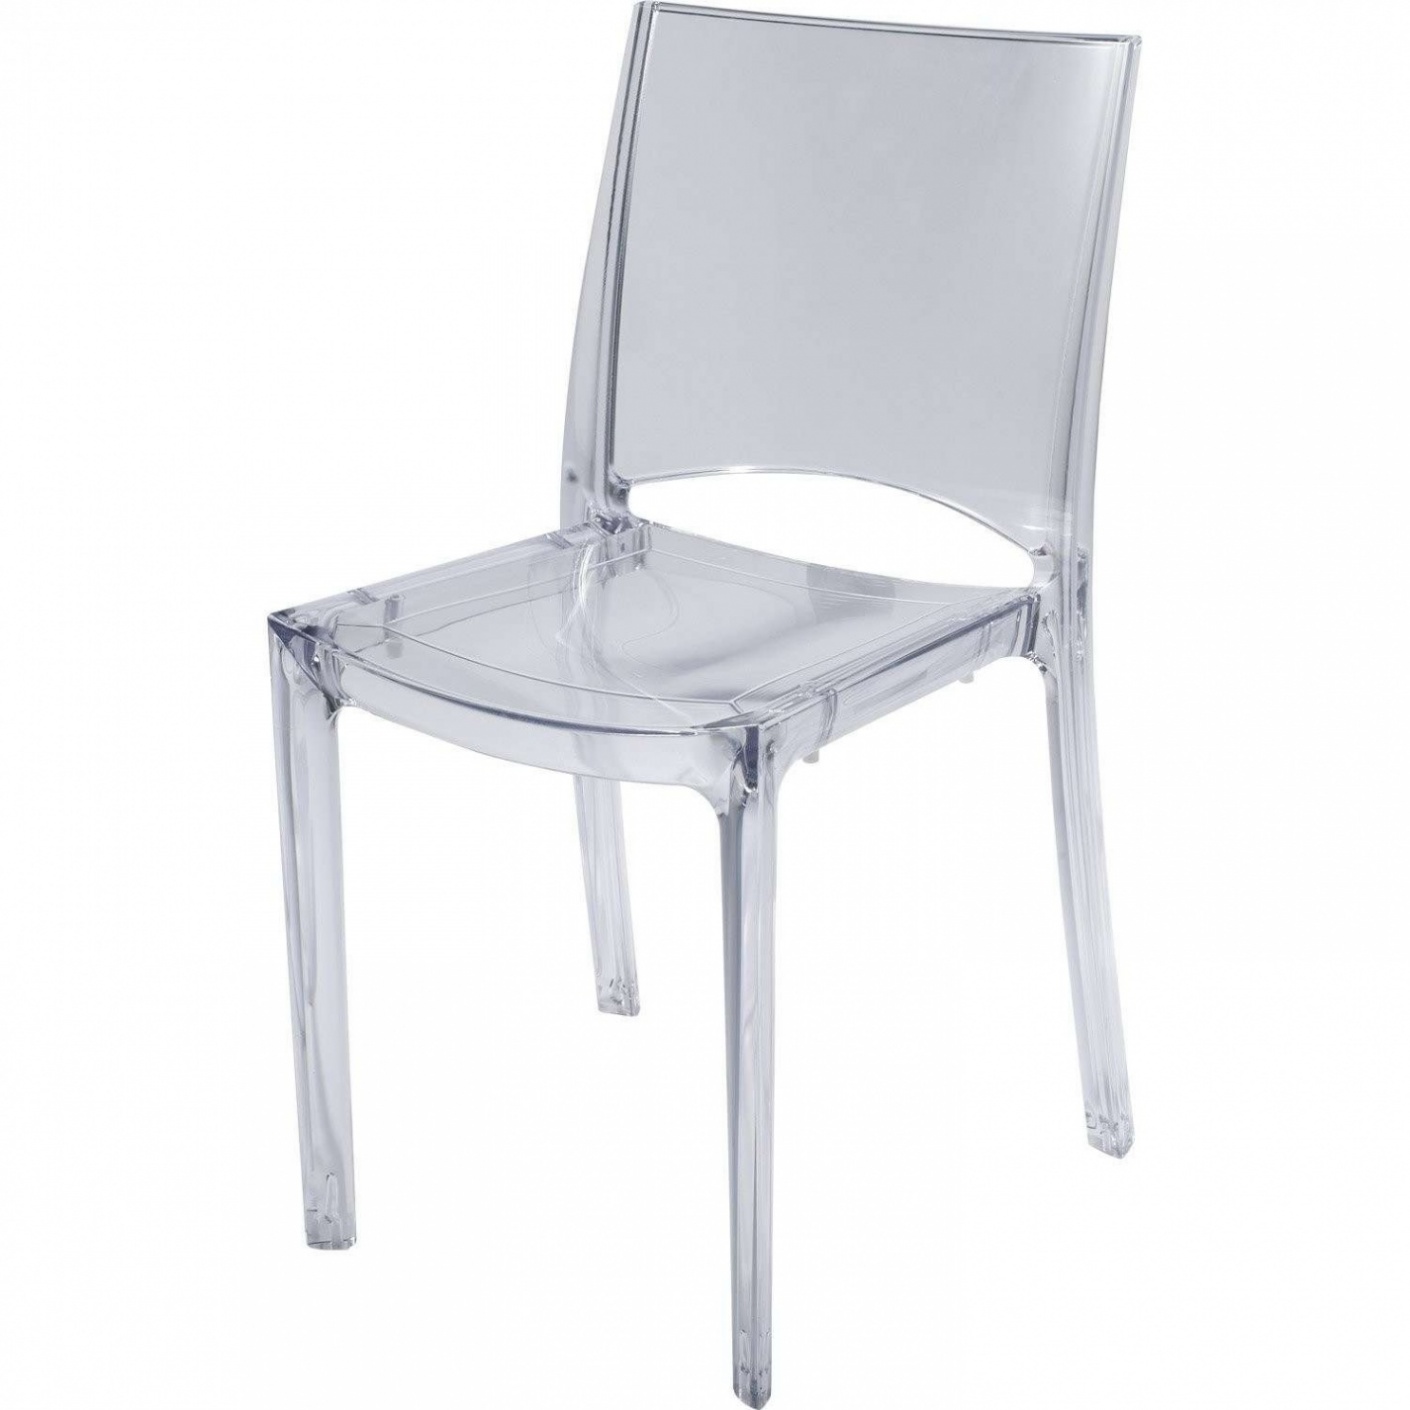 leroy merlin chaise fauteuil relax salon meilleur fauteuil salon 0d canape rotin exterieur of canape rotin exterieur